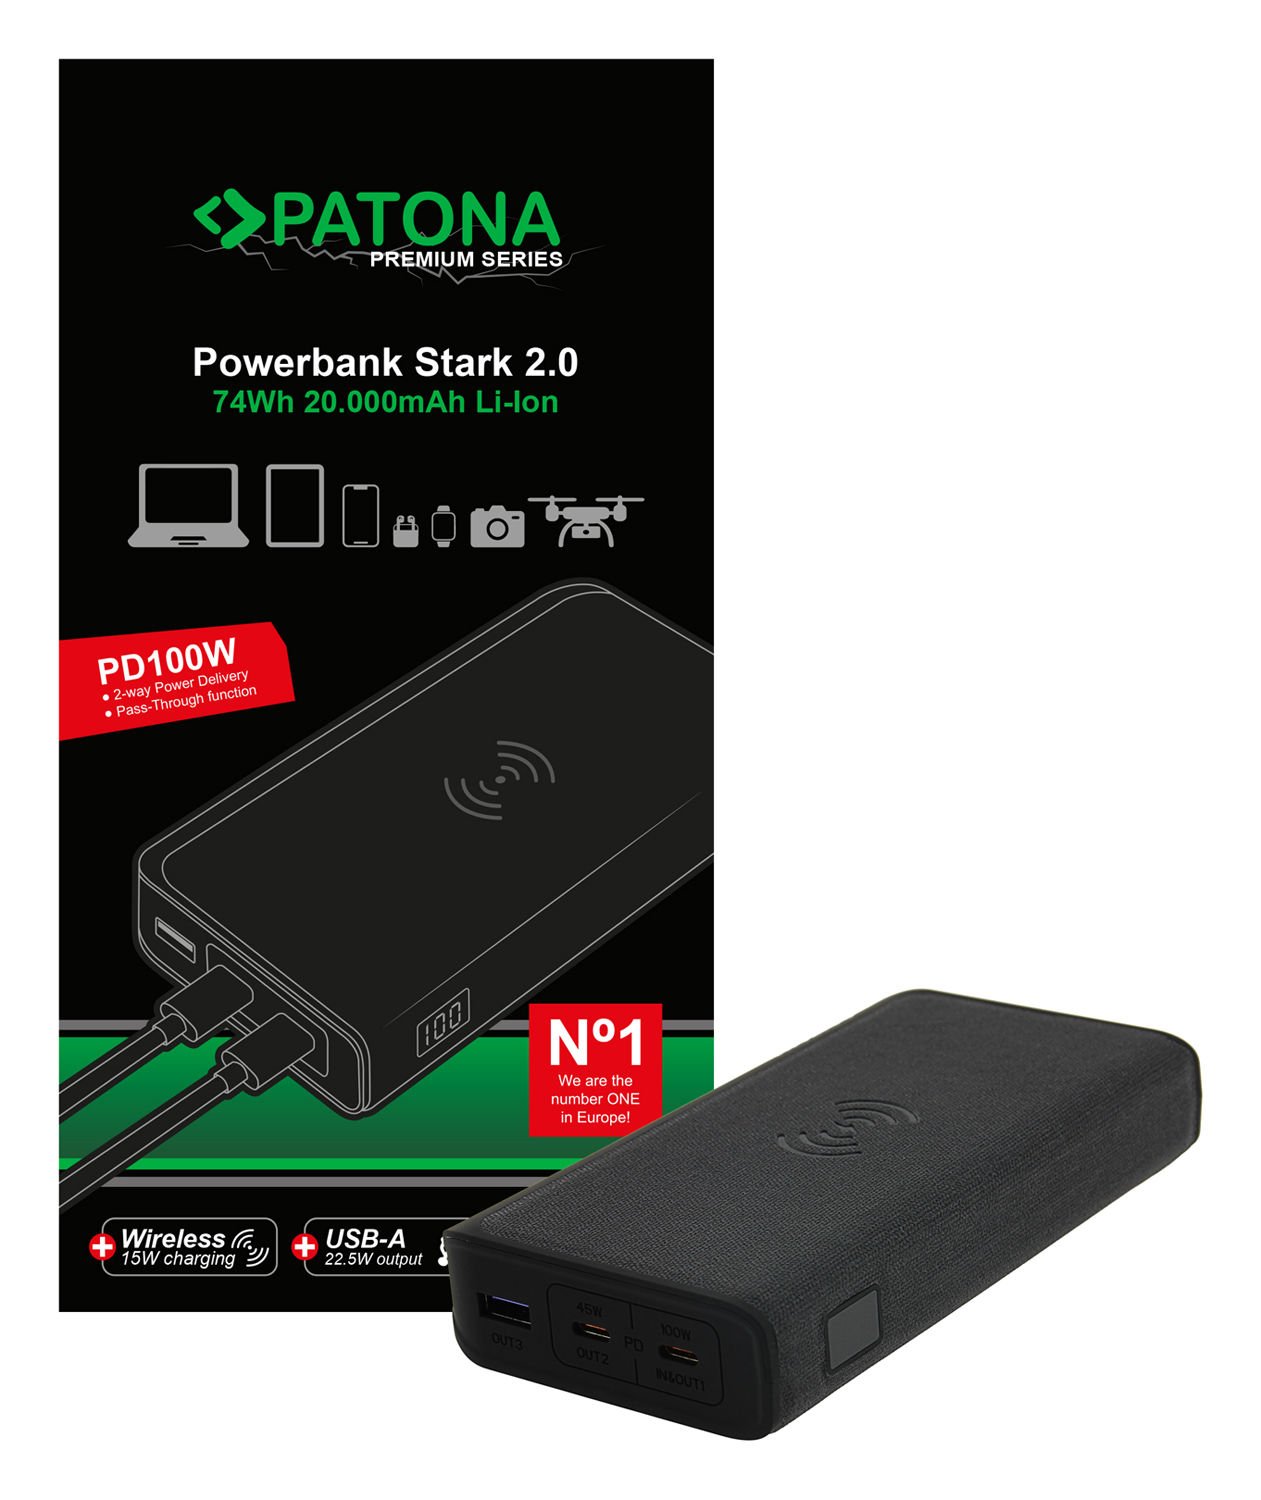 Patona Premium Powerbank Stark 2.0